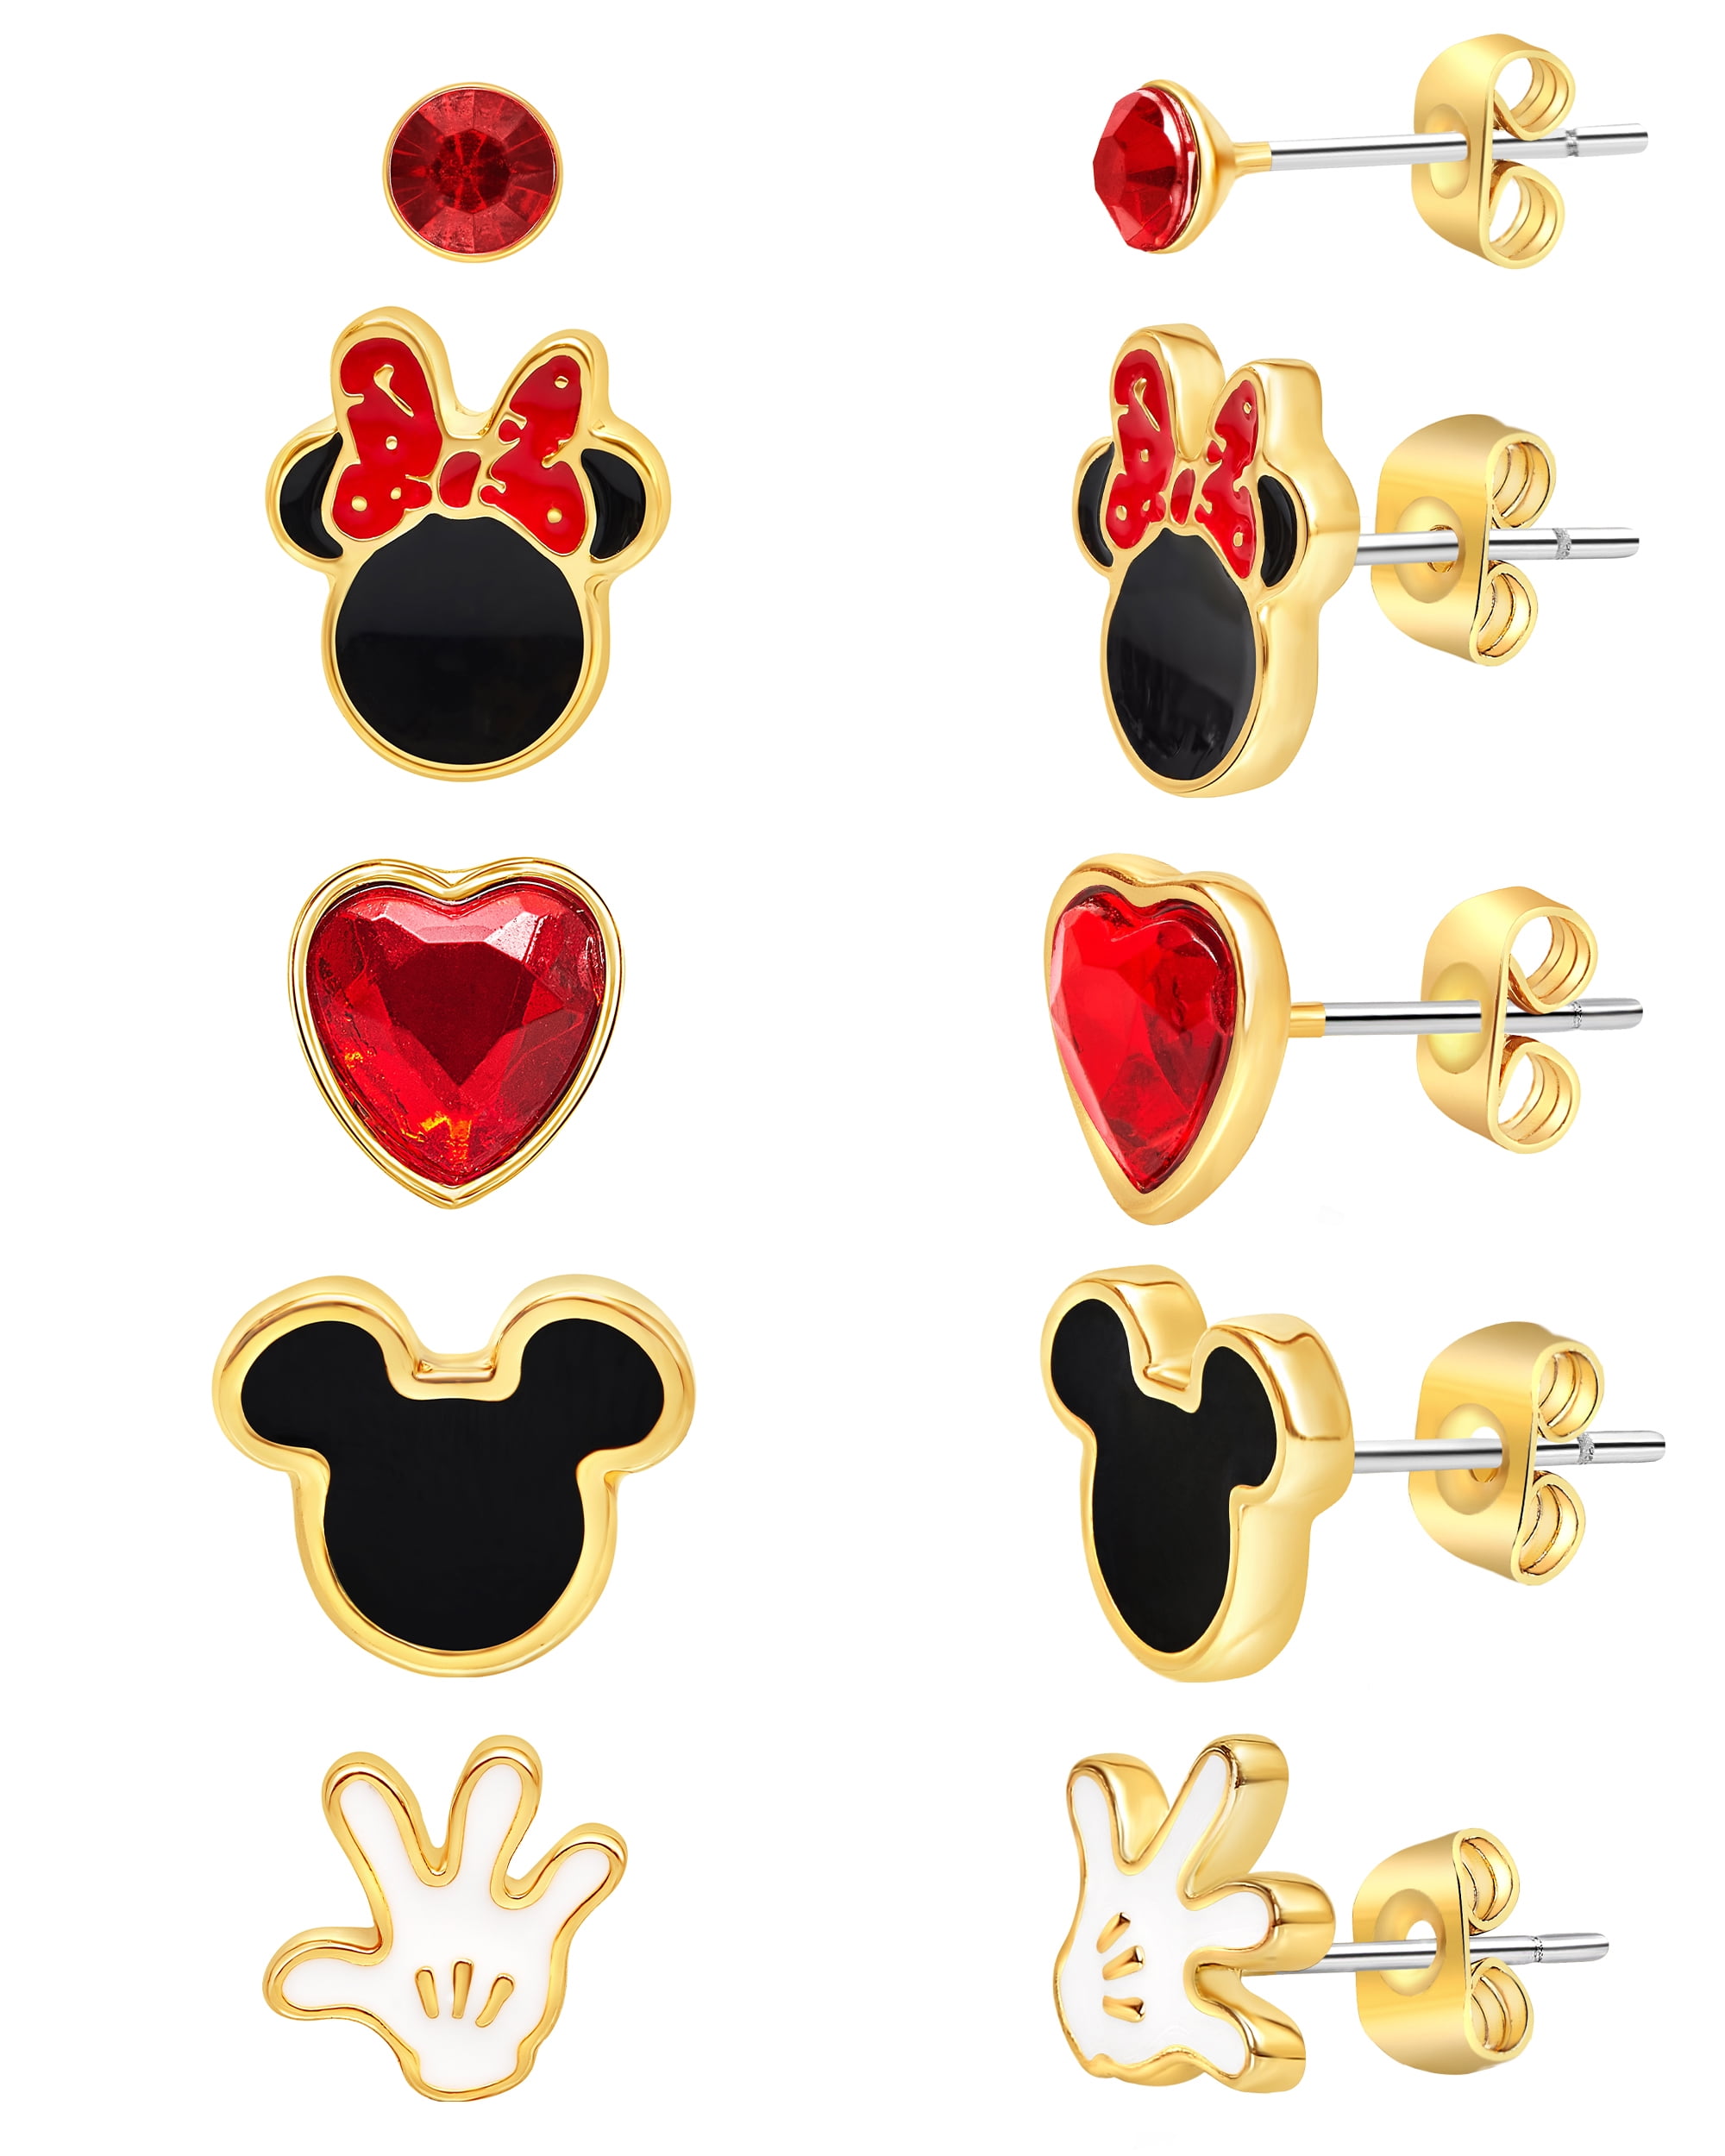 Disney Mickey Mouse Necklace & Earrings set W/Genuine Crystal in Base Metal 